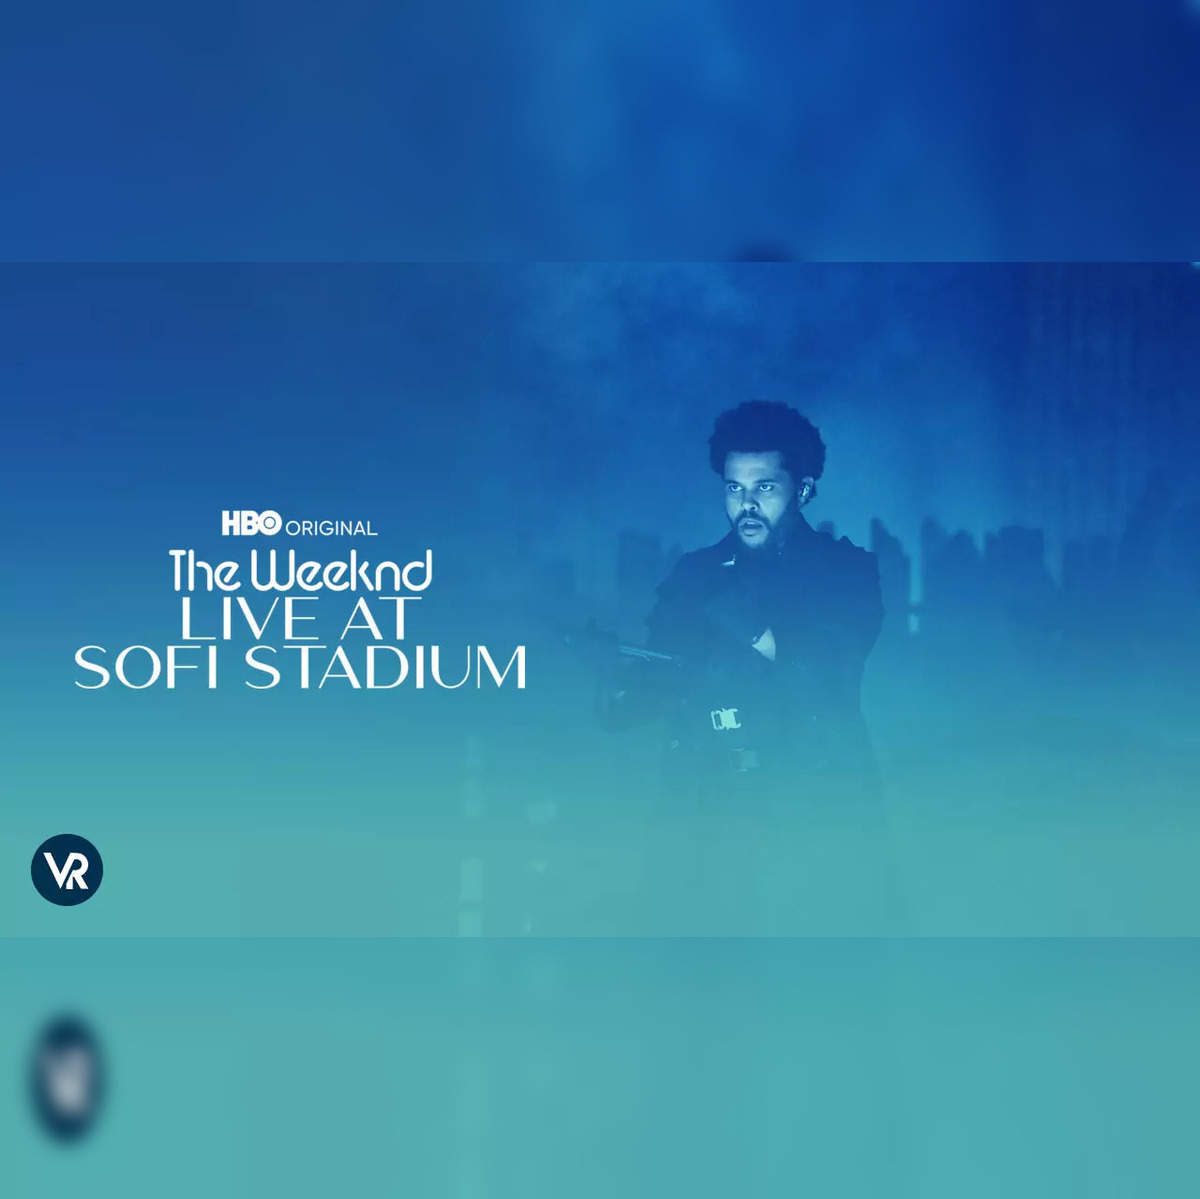 The Weeknd Shares New 'Live at SoFi Stadium' Album